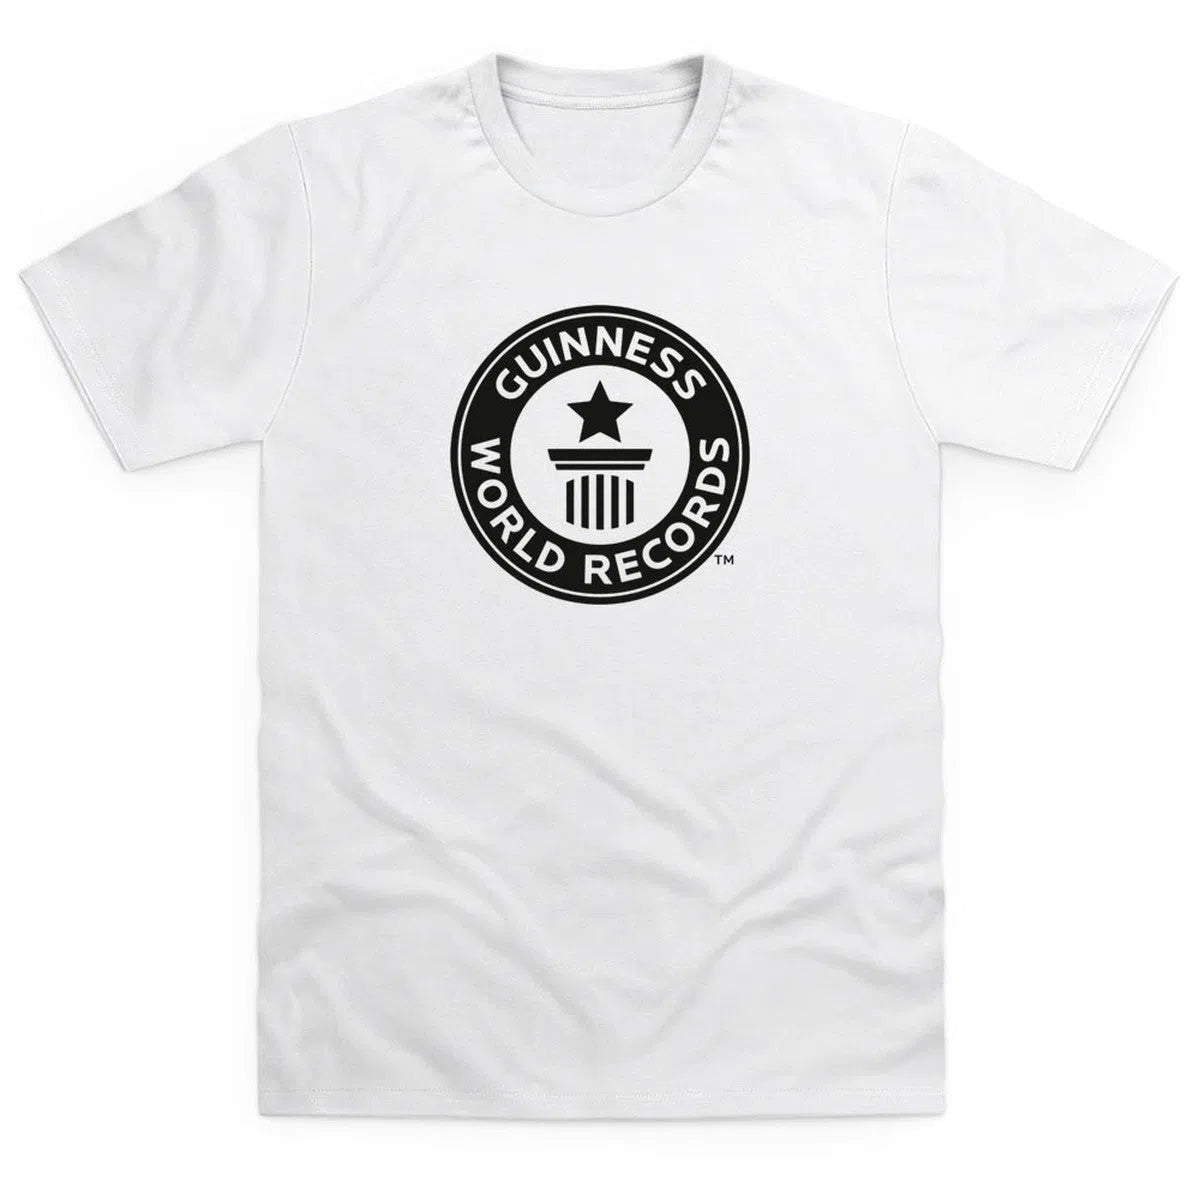 Men's T-shirt with black logo-Guinness World Records